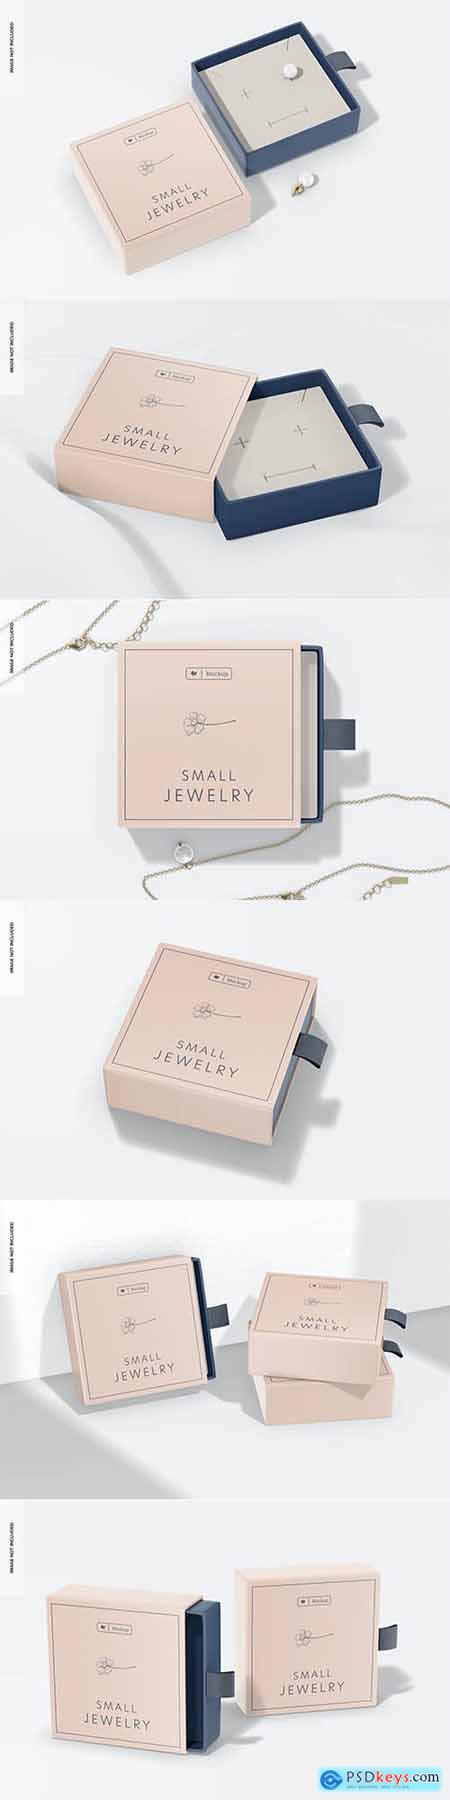 Small jewelry paper box mockup